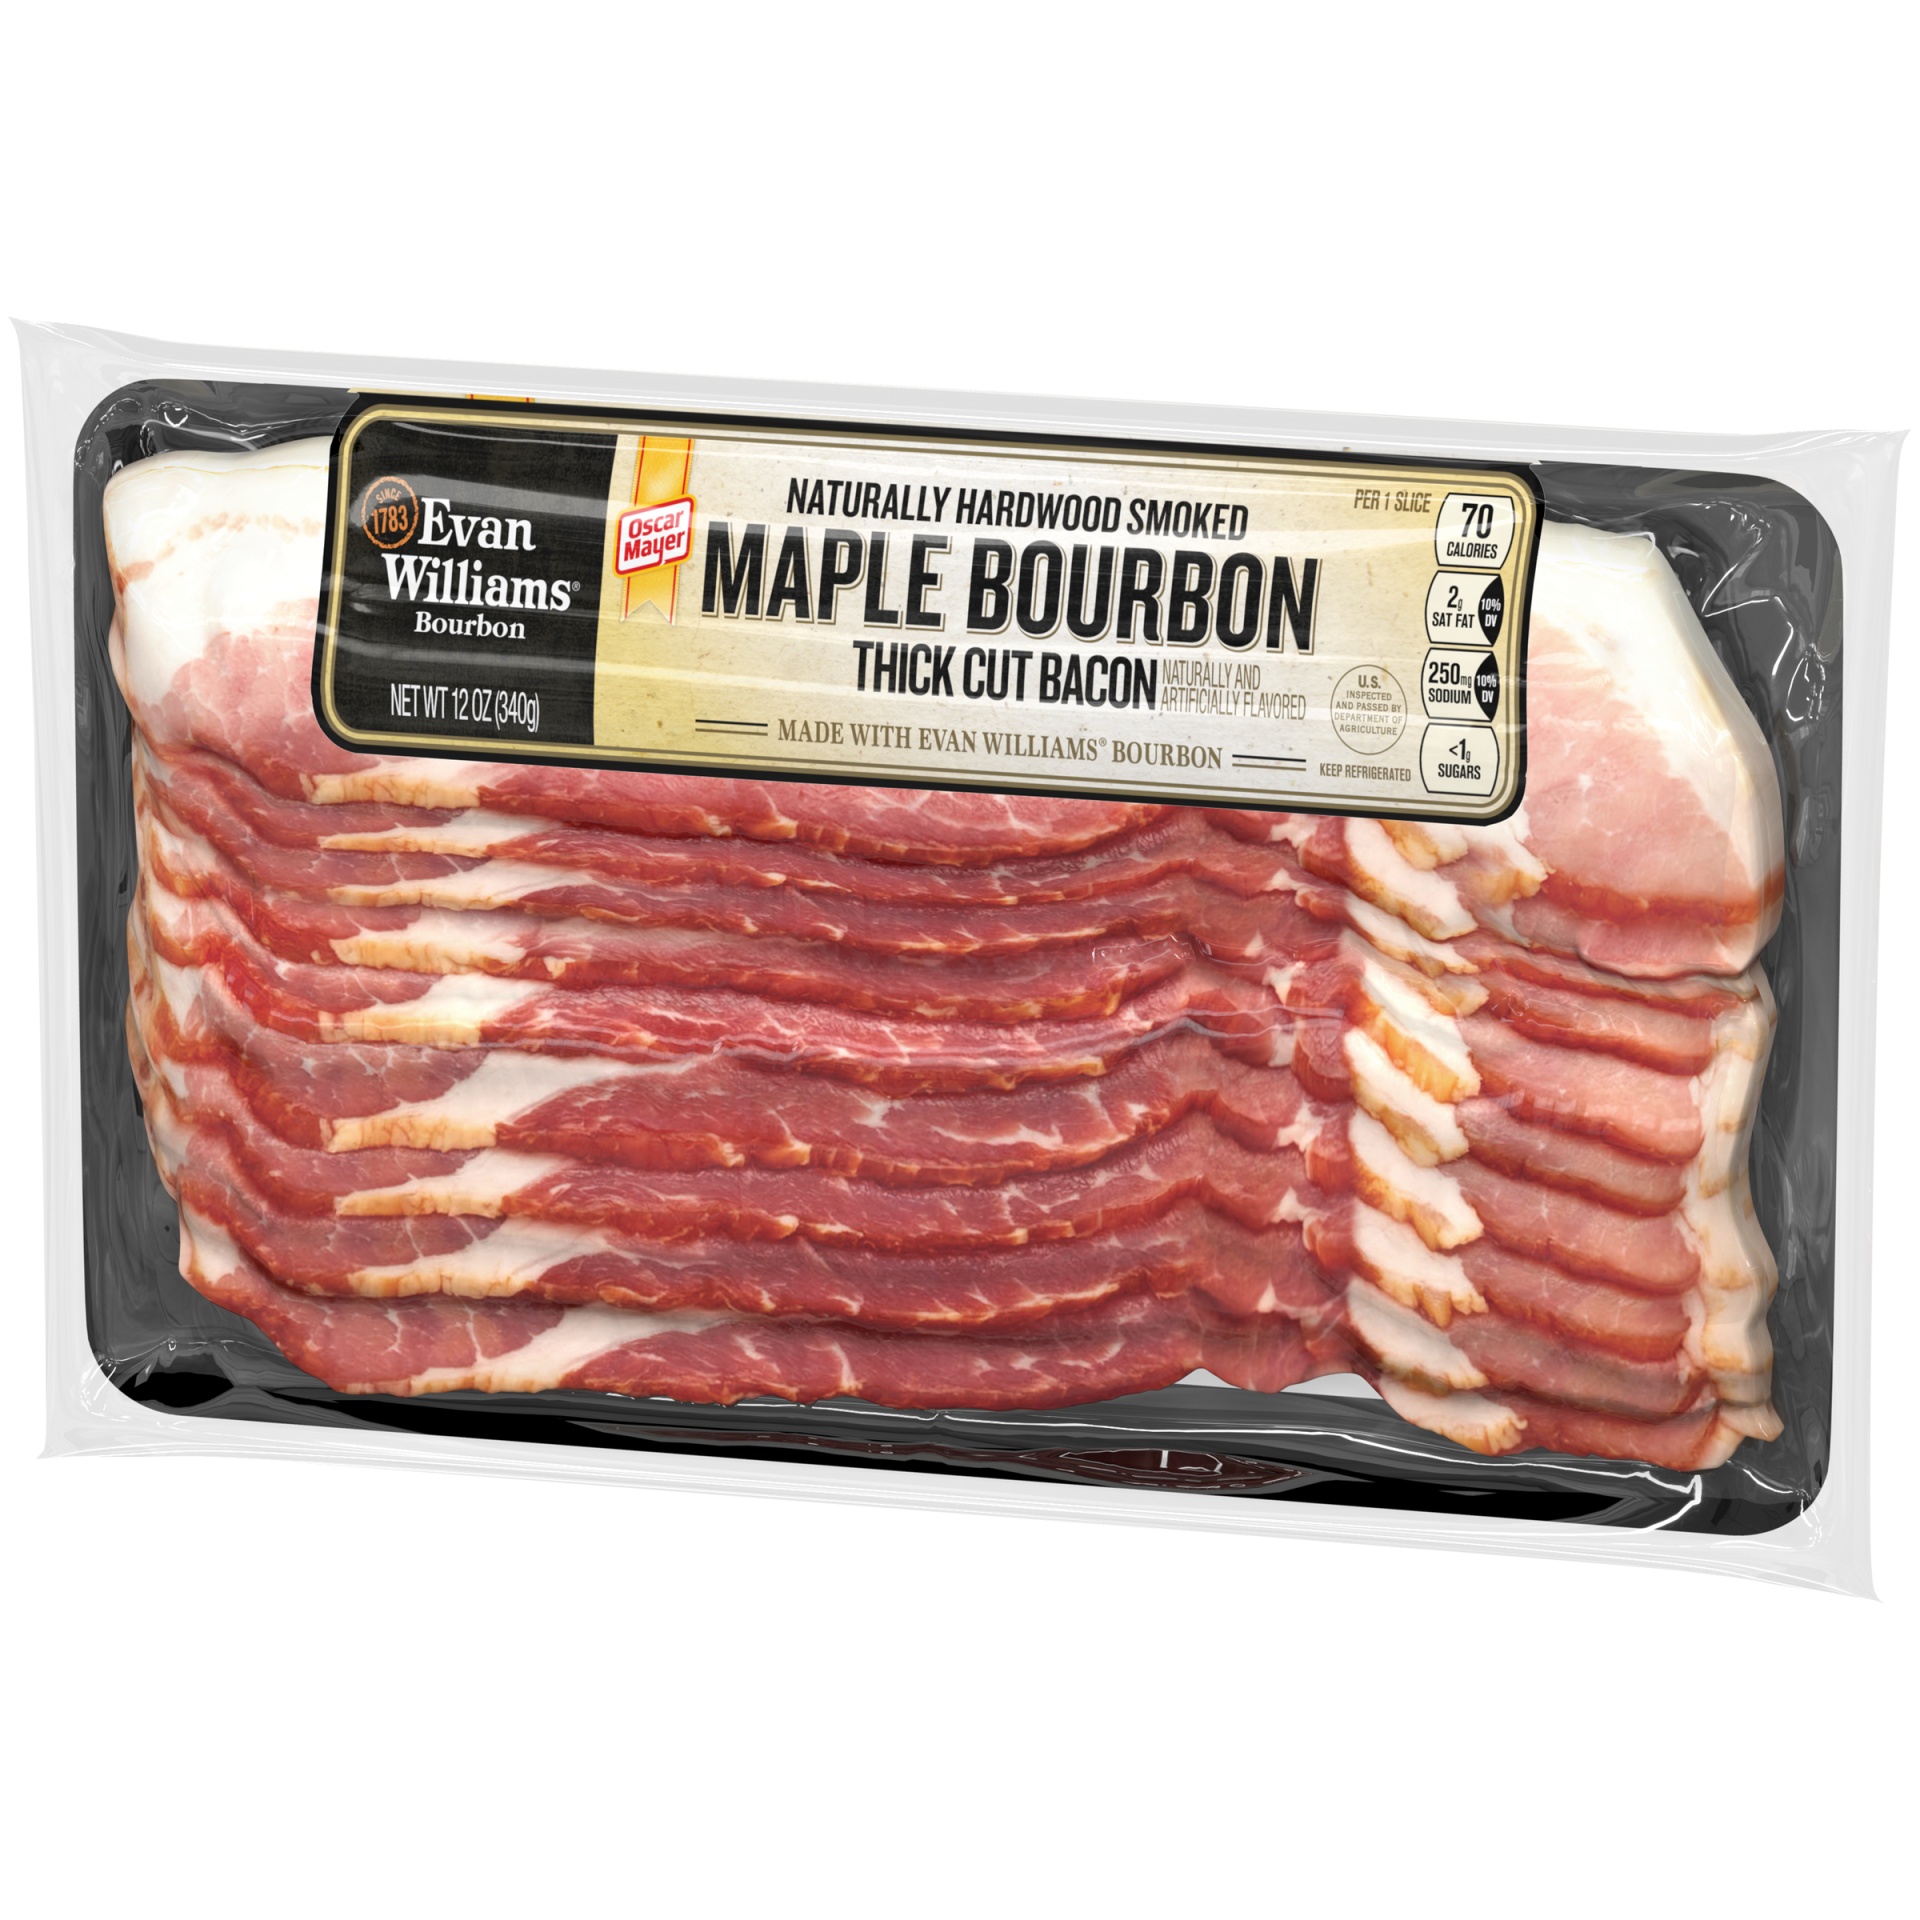 slide 8 of 12, Oscar Mayer Maple Bourbon Naturally Hardwood Smoked Thick Cut Bacon with Evan Williams Bourbon, 8-10 slices, 12 oz